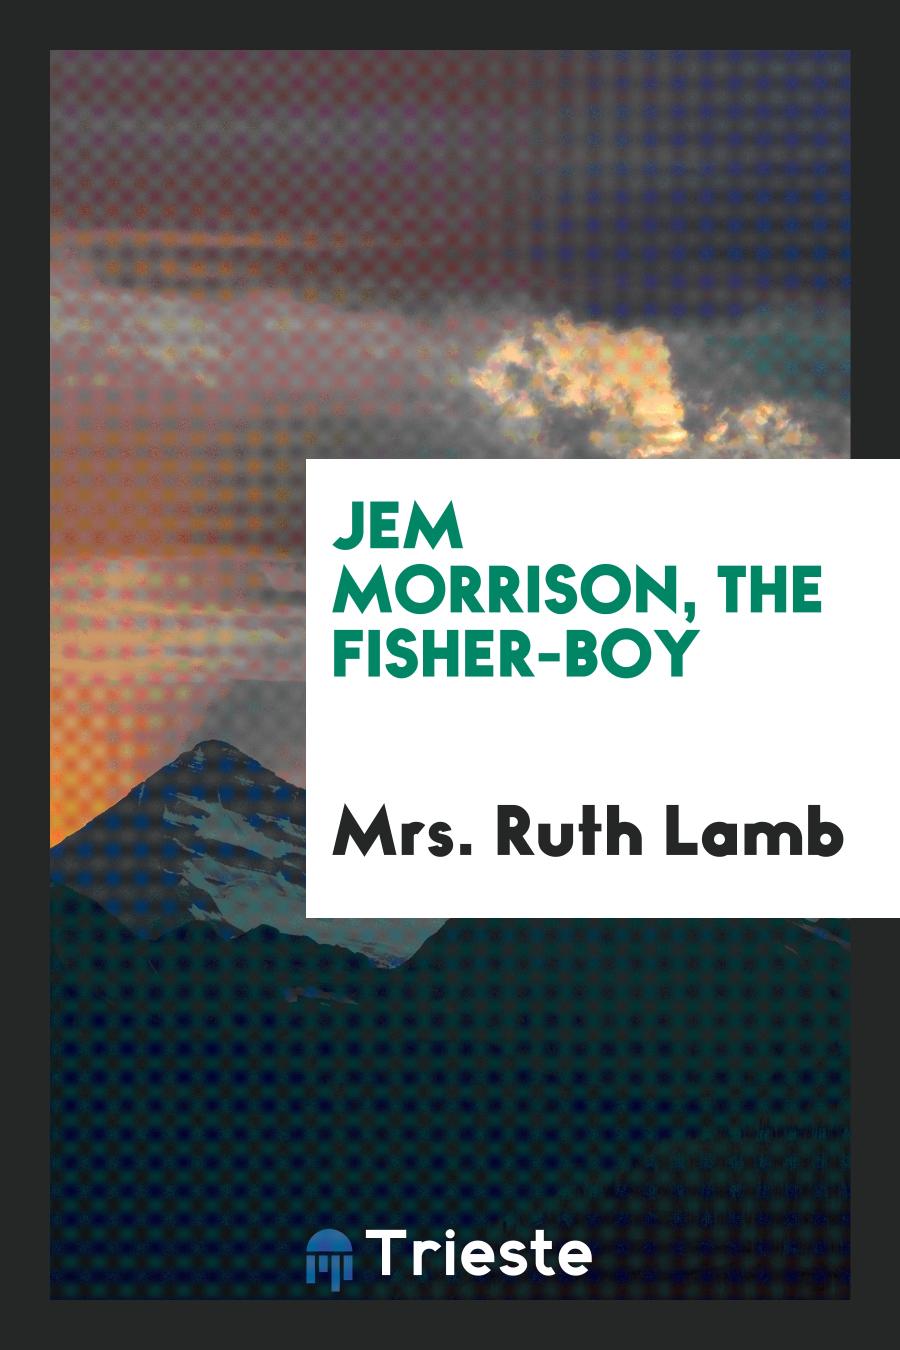 Jem Morrison, the fisher-boy